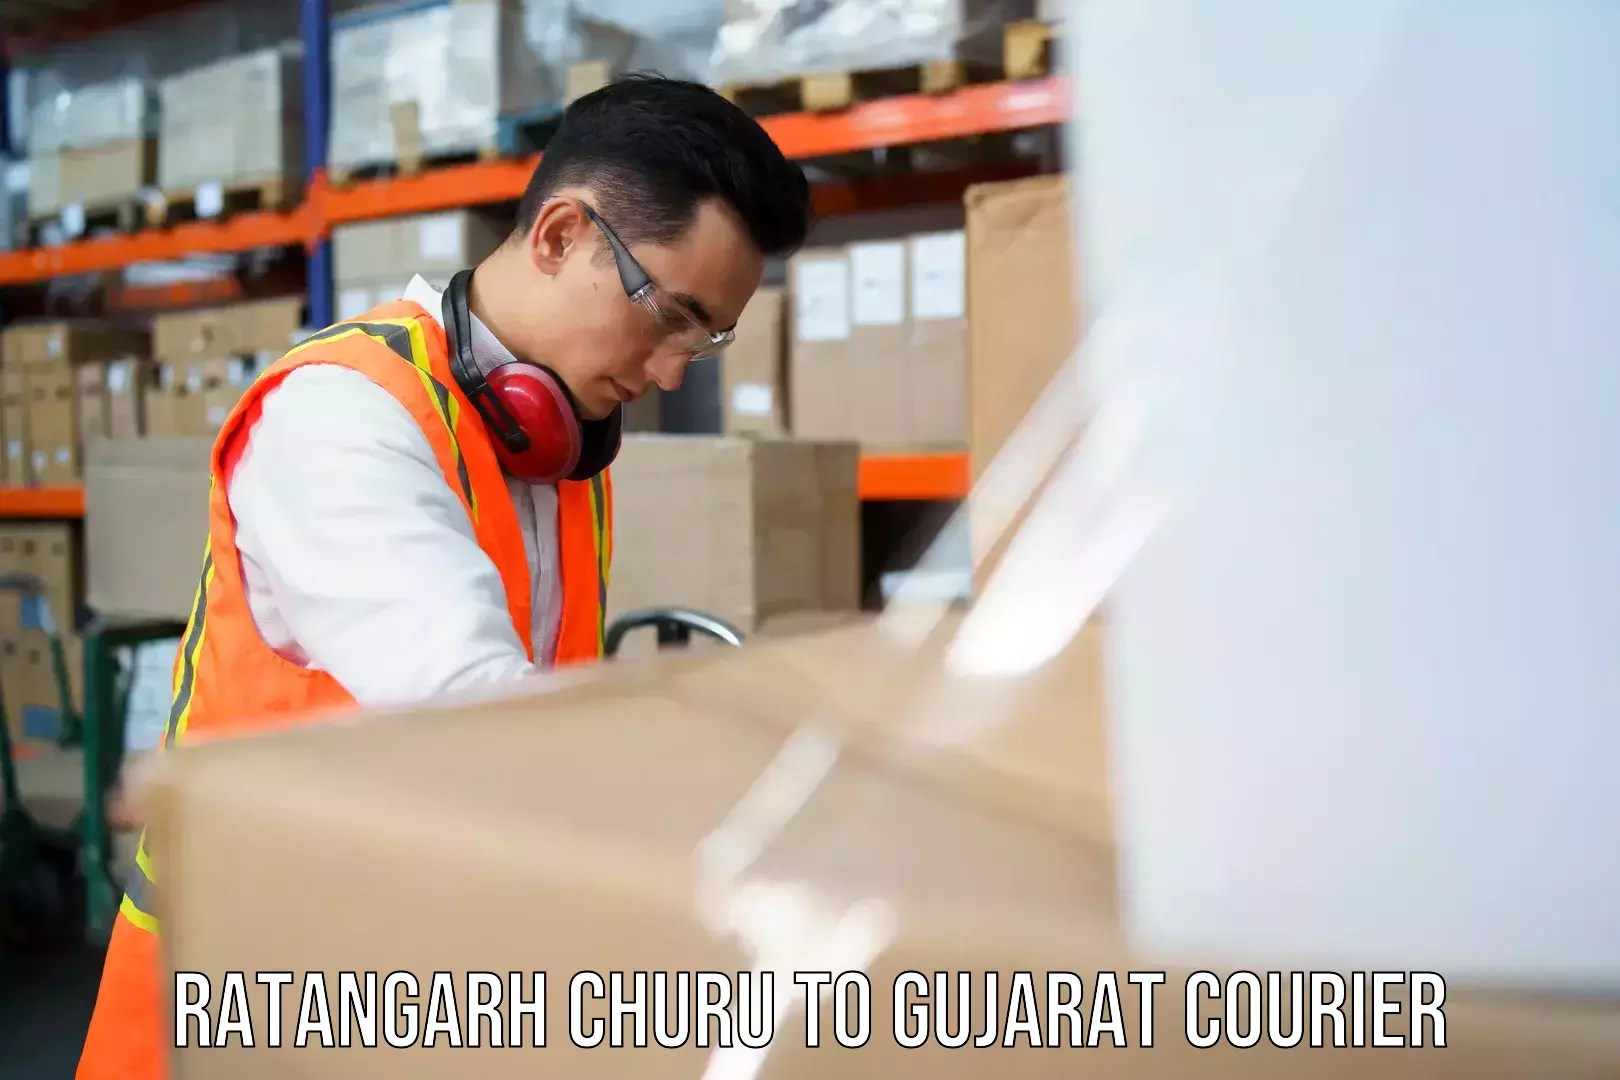 Courier service comparison Ratangarh Churu to Gujarat